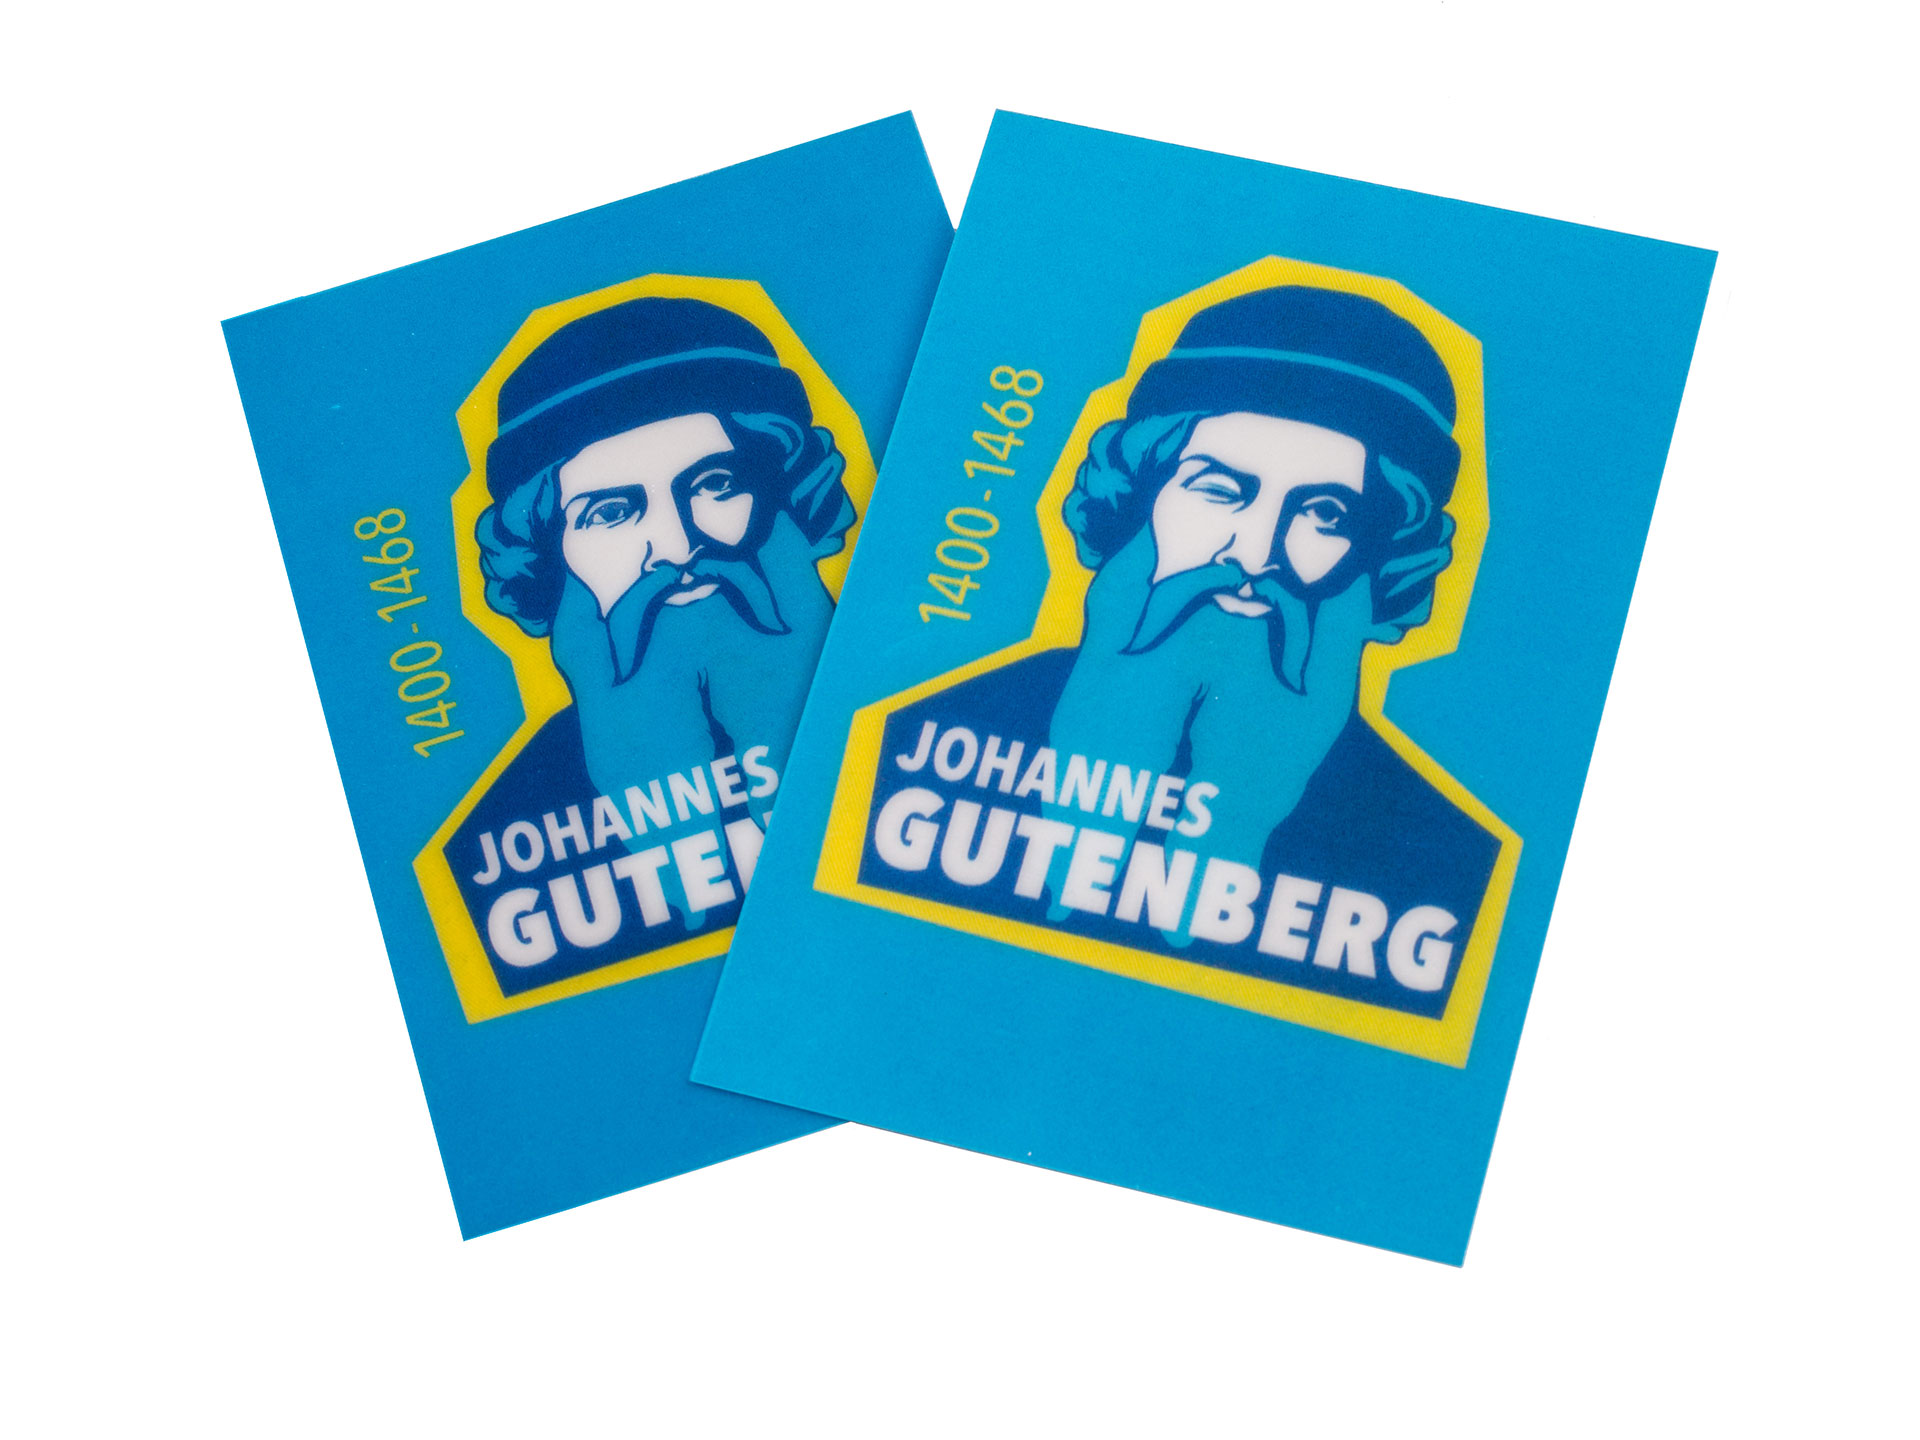 Johannes Gutenberg lenticular postcard